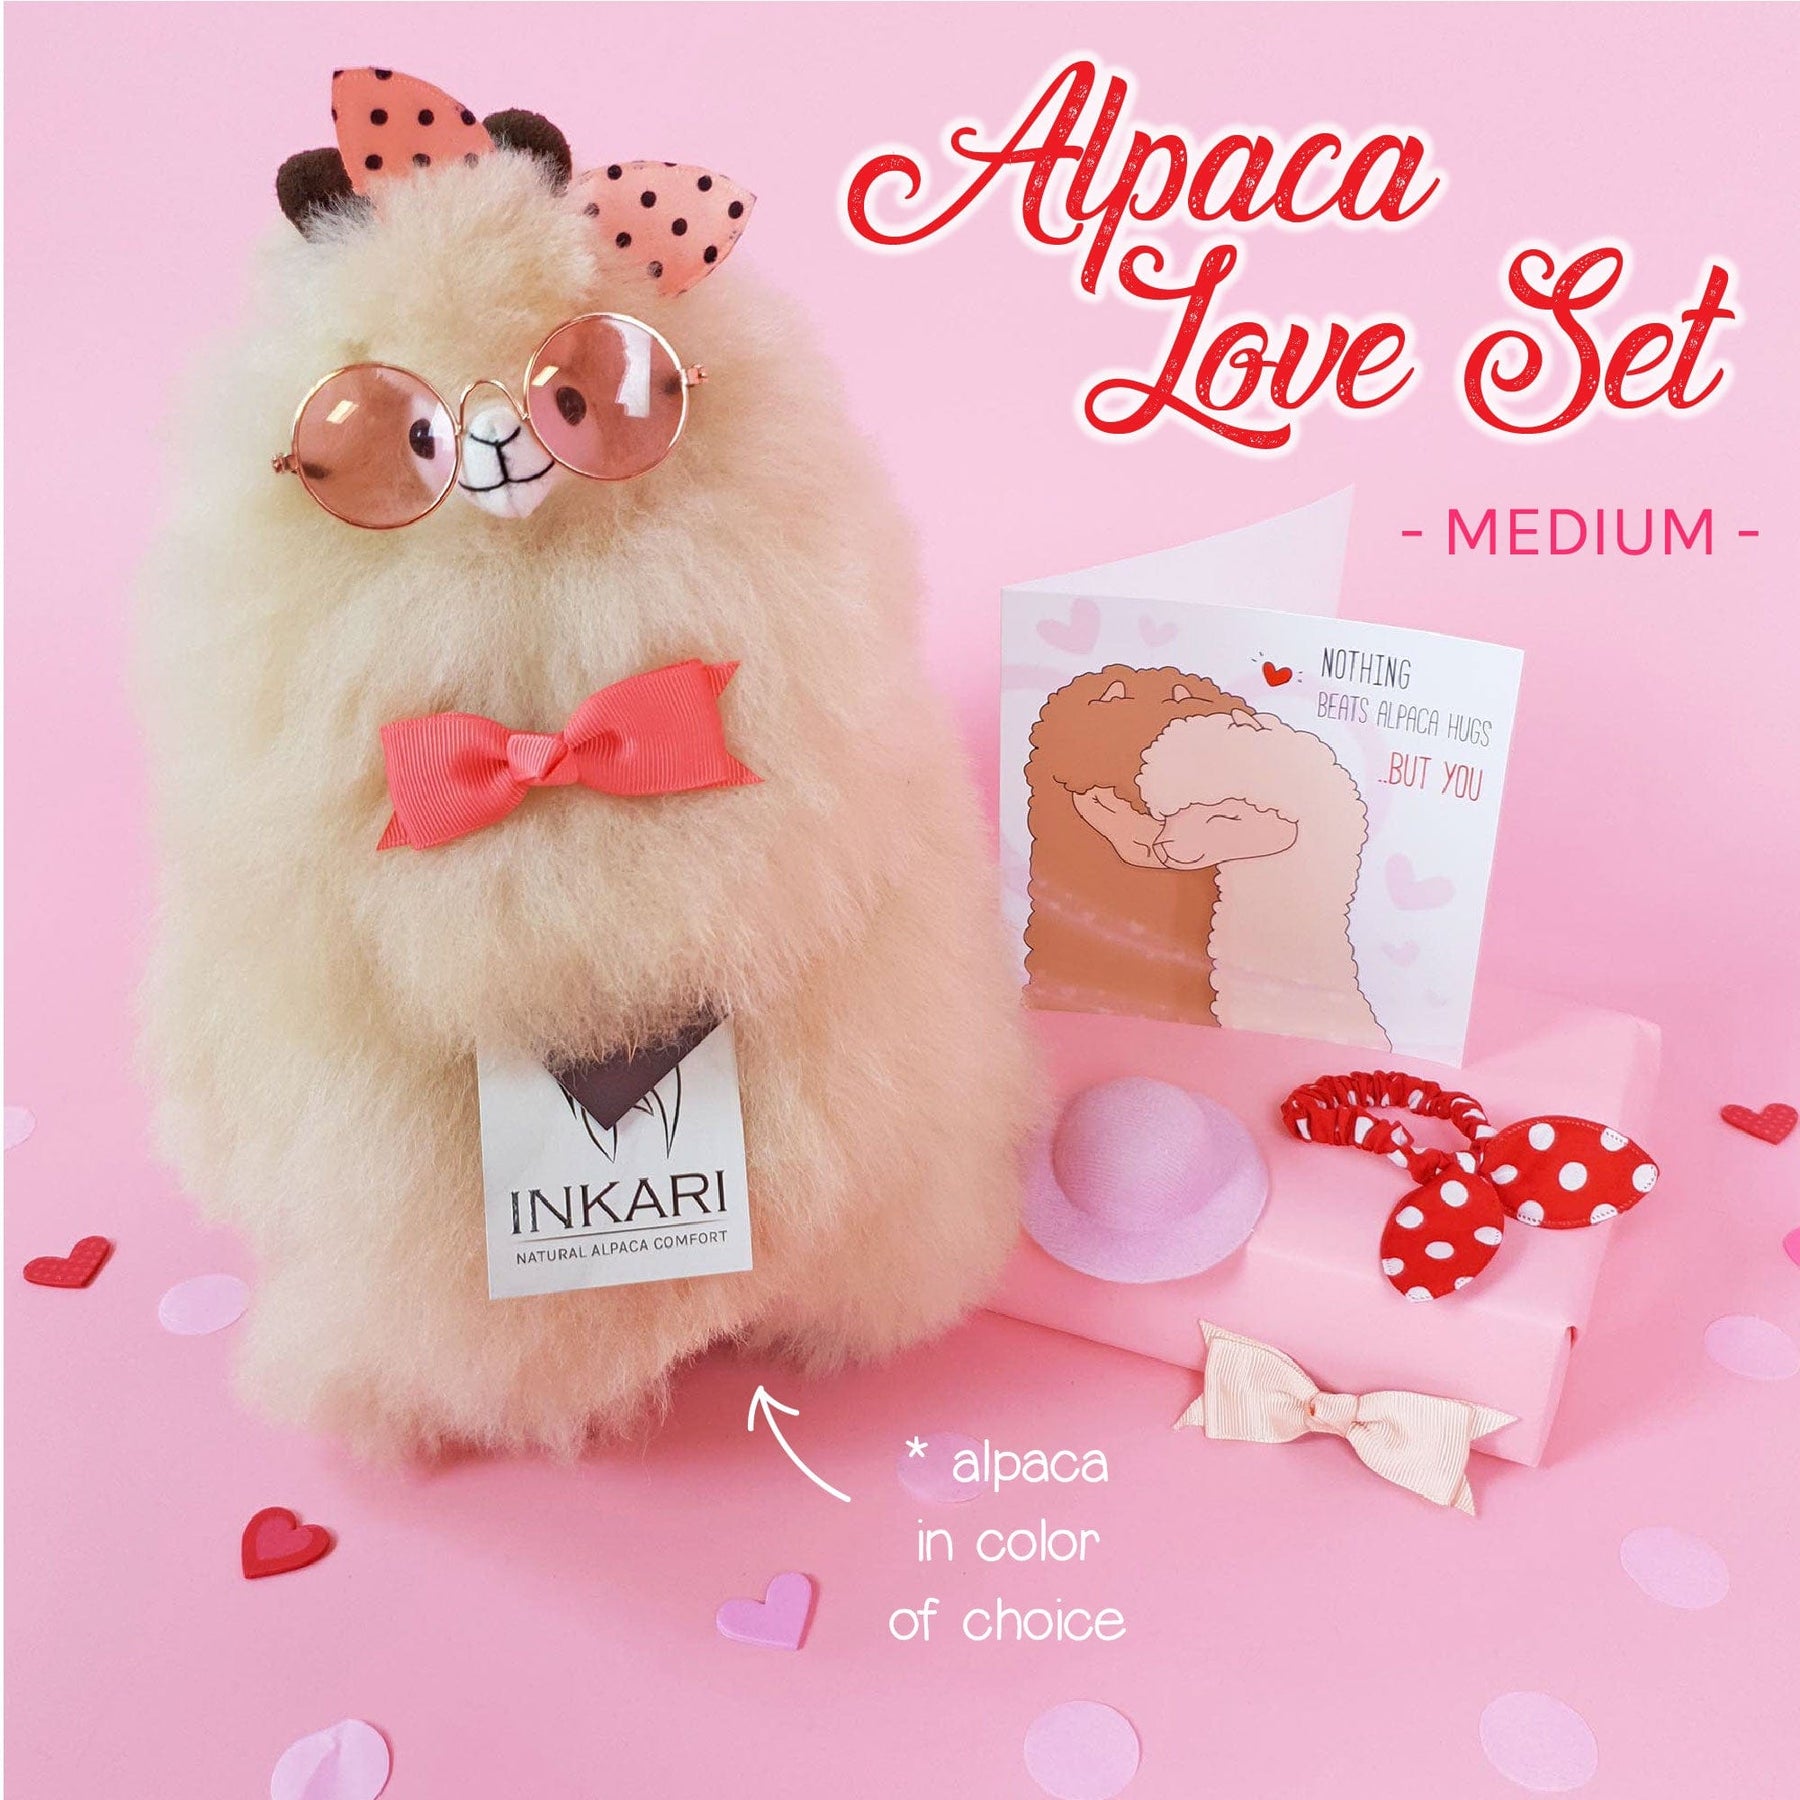 Alpaca Gift Sets ❤ MEDIUM ❤ Love - Stuffed Animal - alpaca gift - hypoallergenic - inkari.